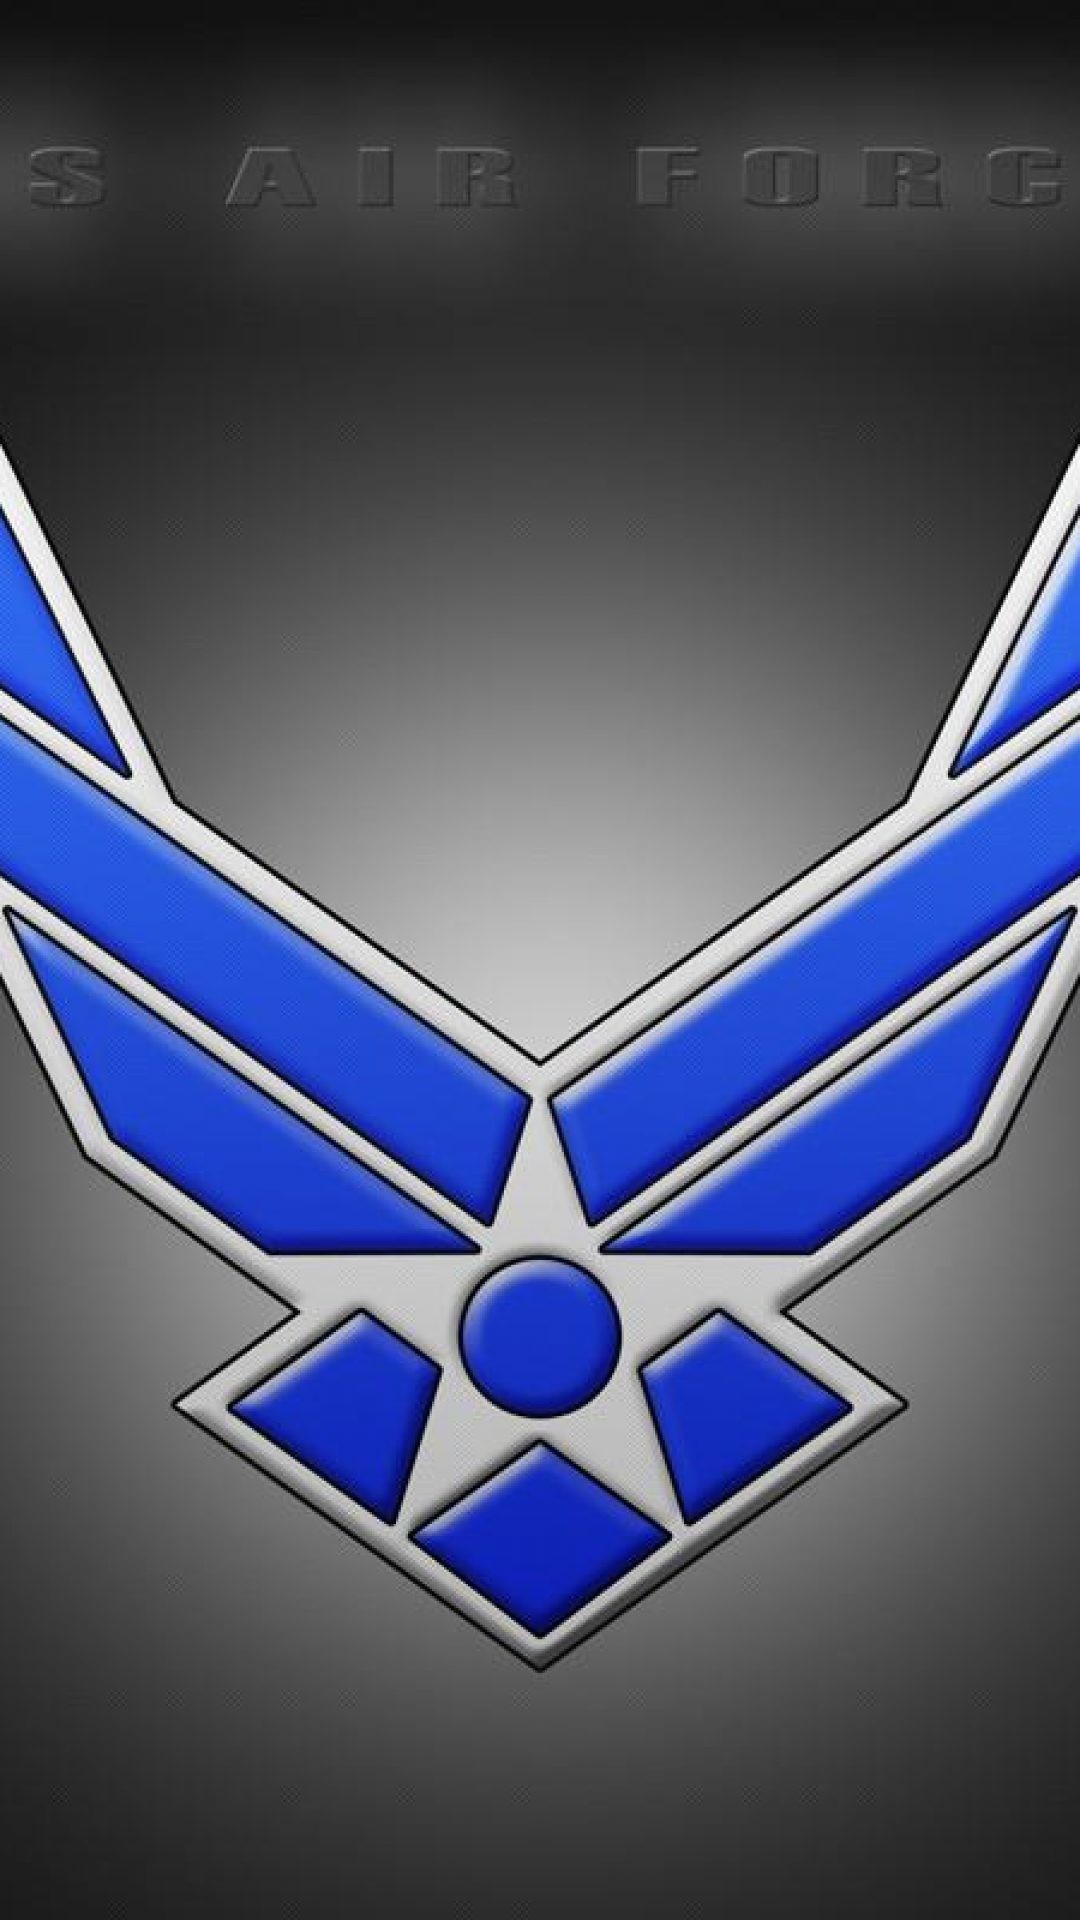 1080x1920 Air Force Logo Wallpaper Hd